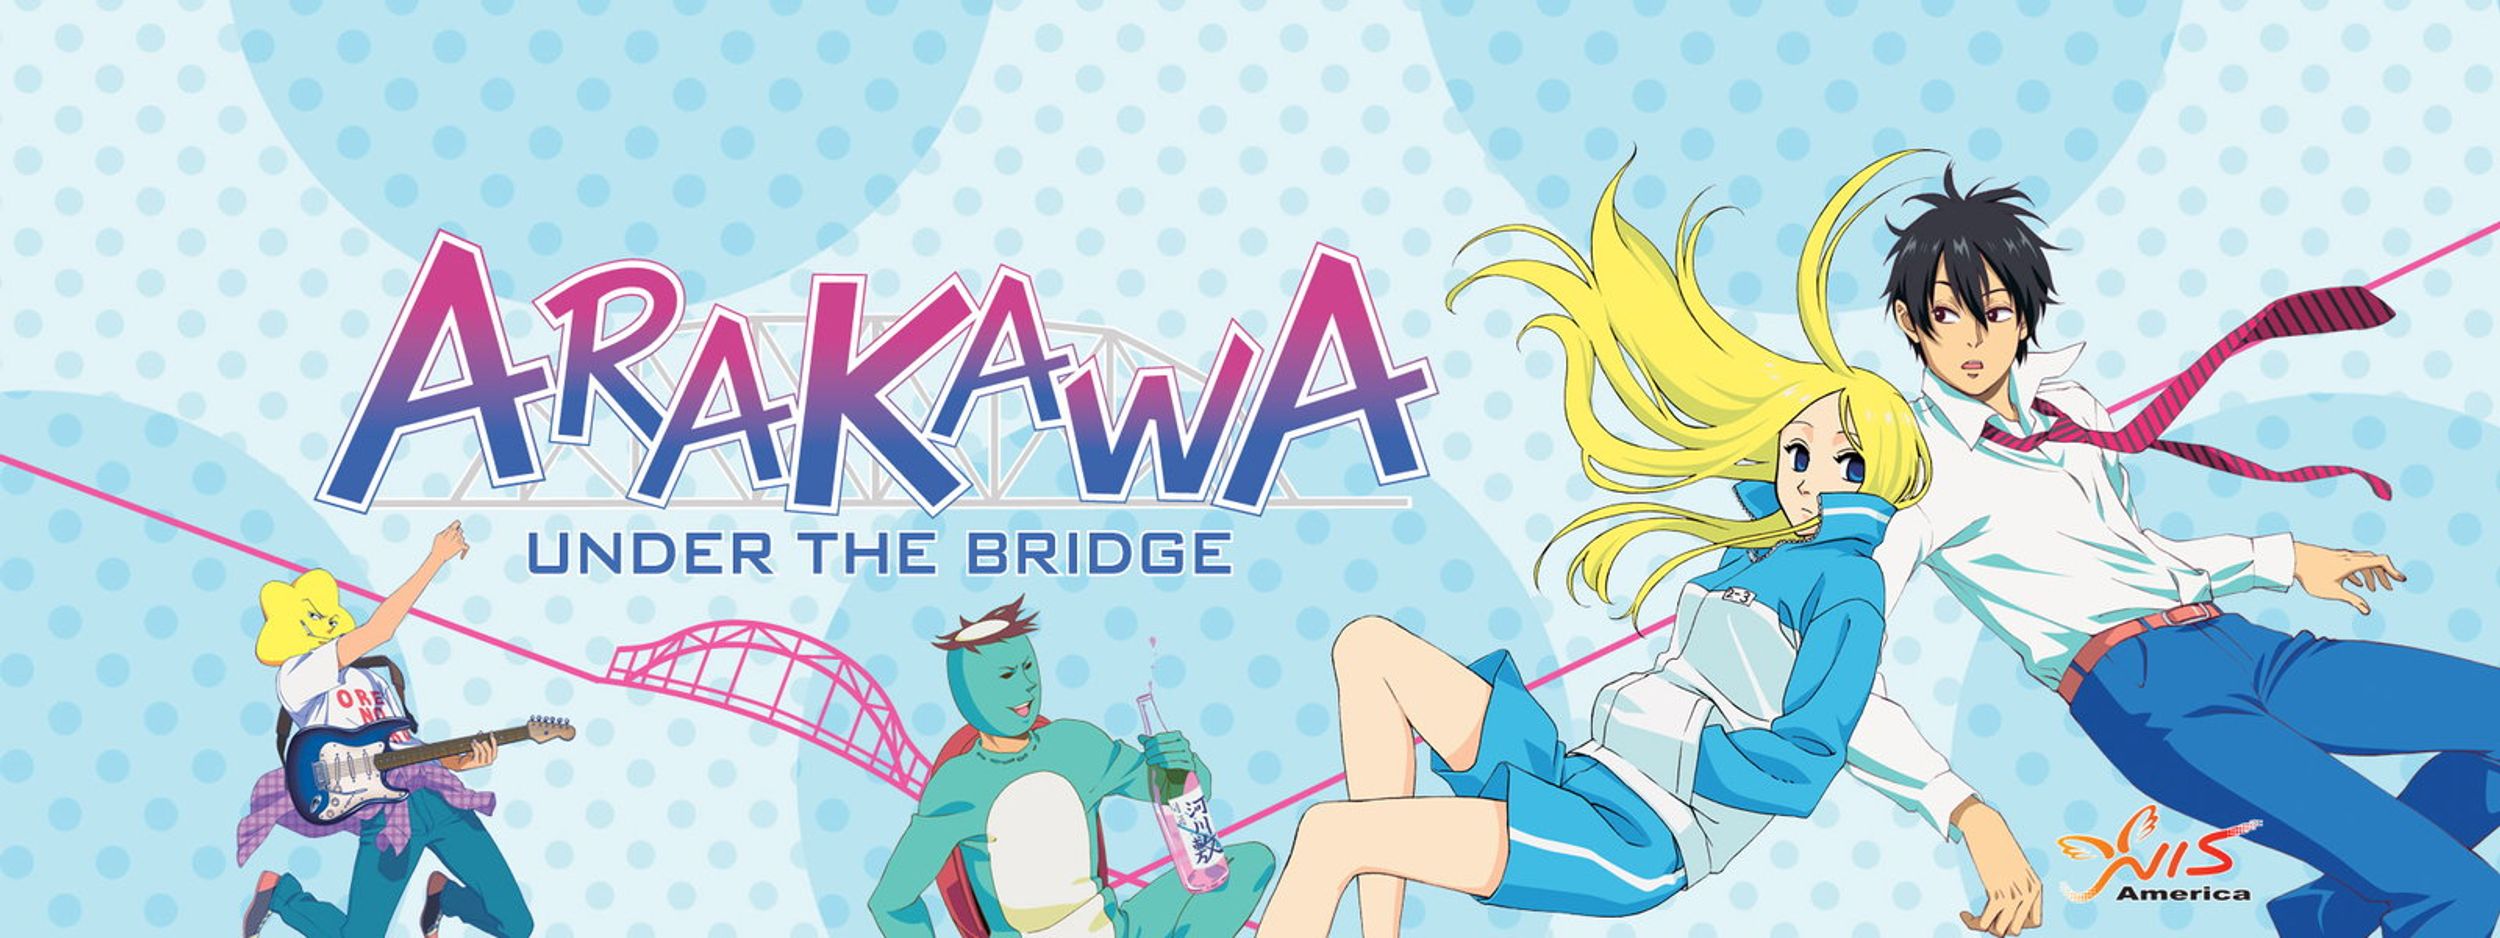 Why You Should Watch Arakawa Under the Bridge